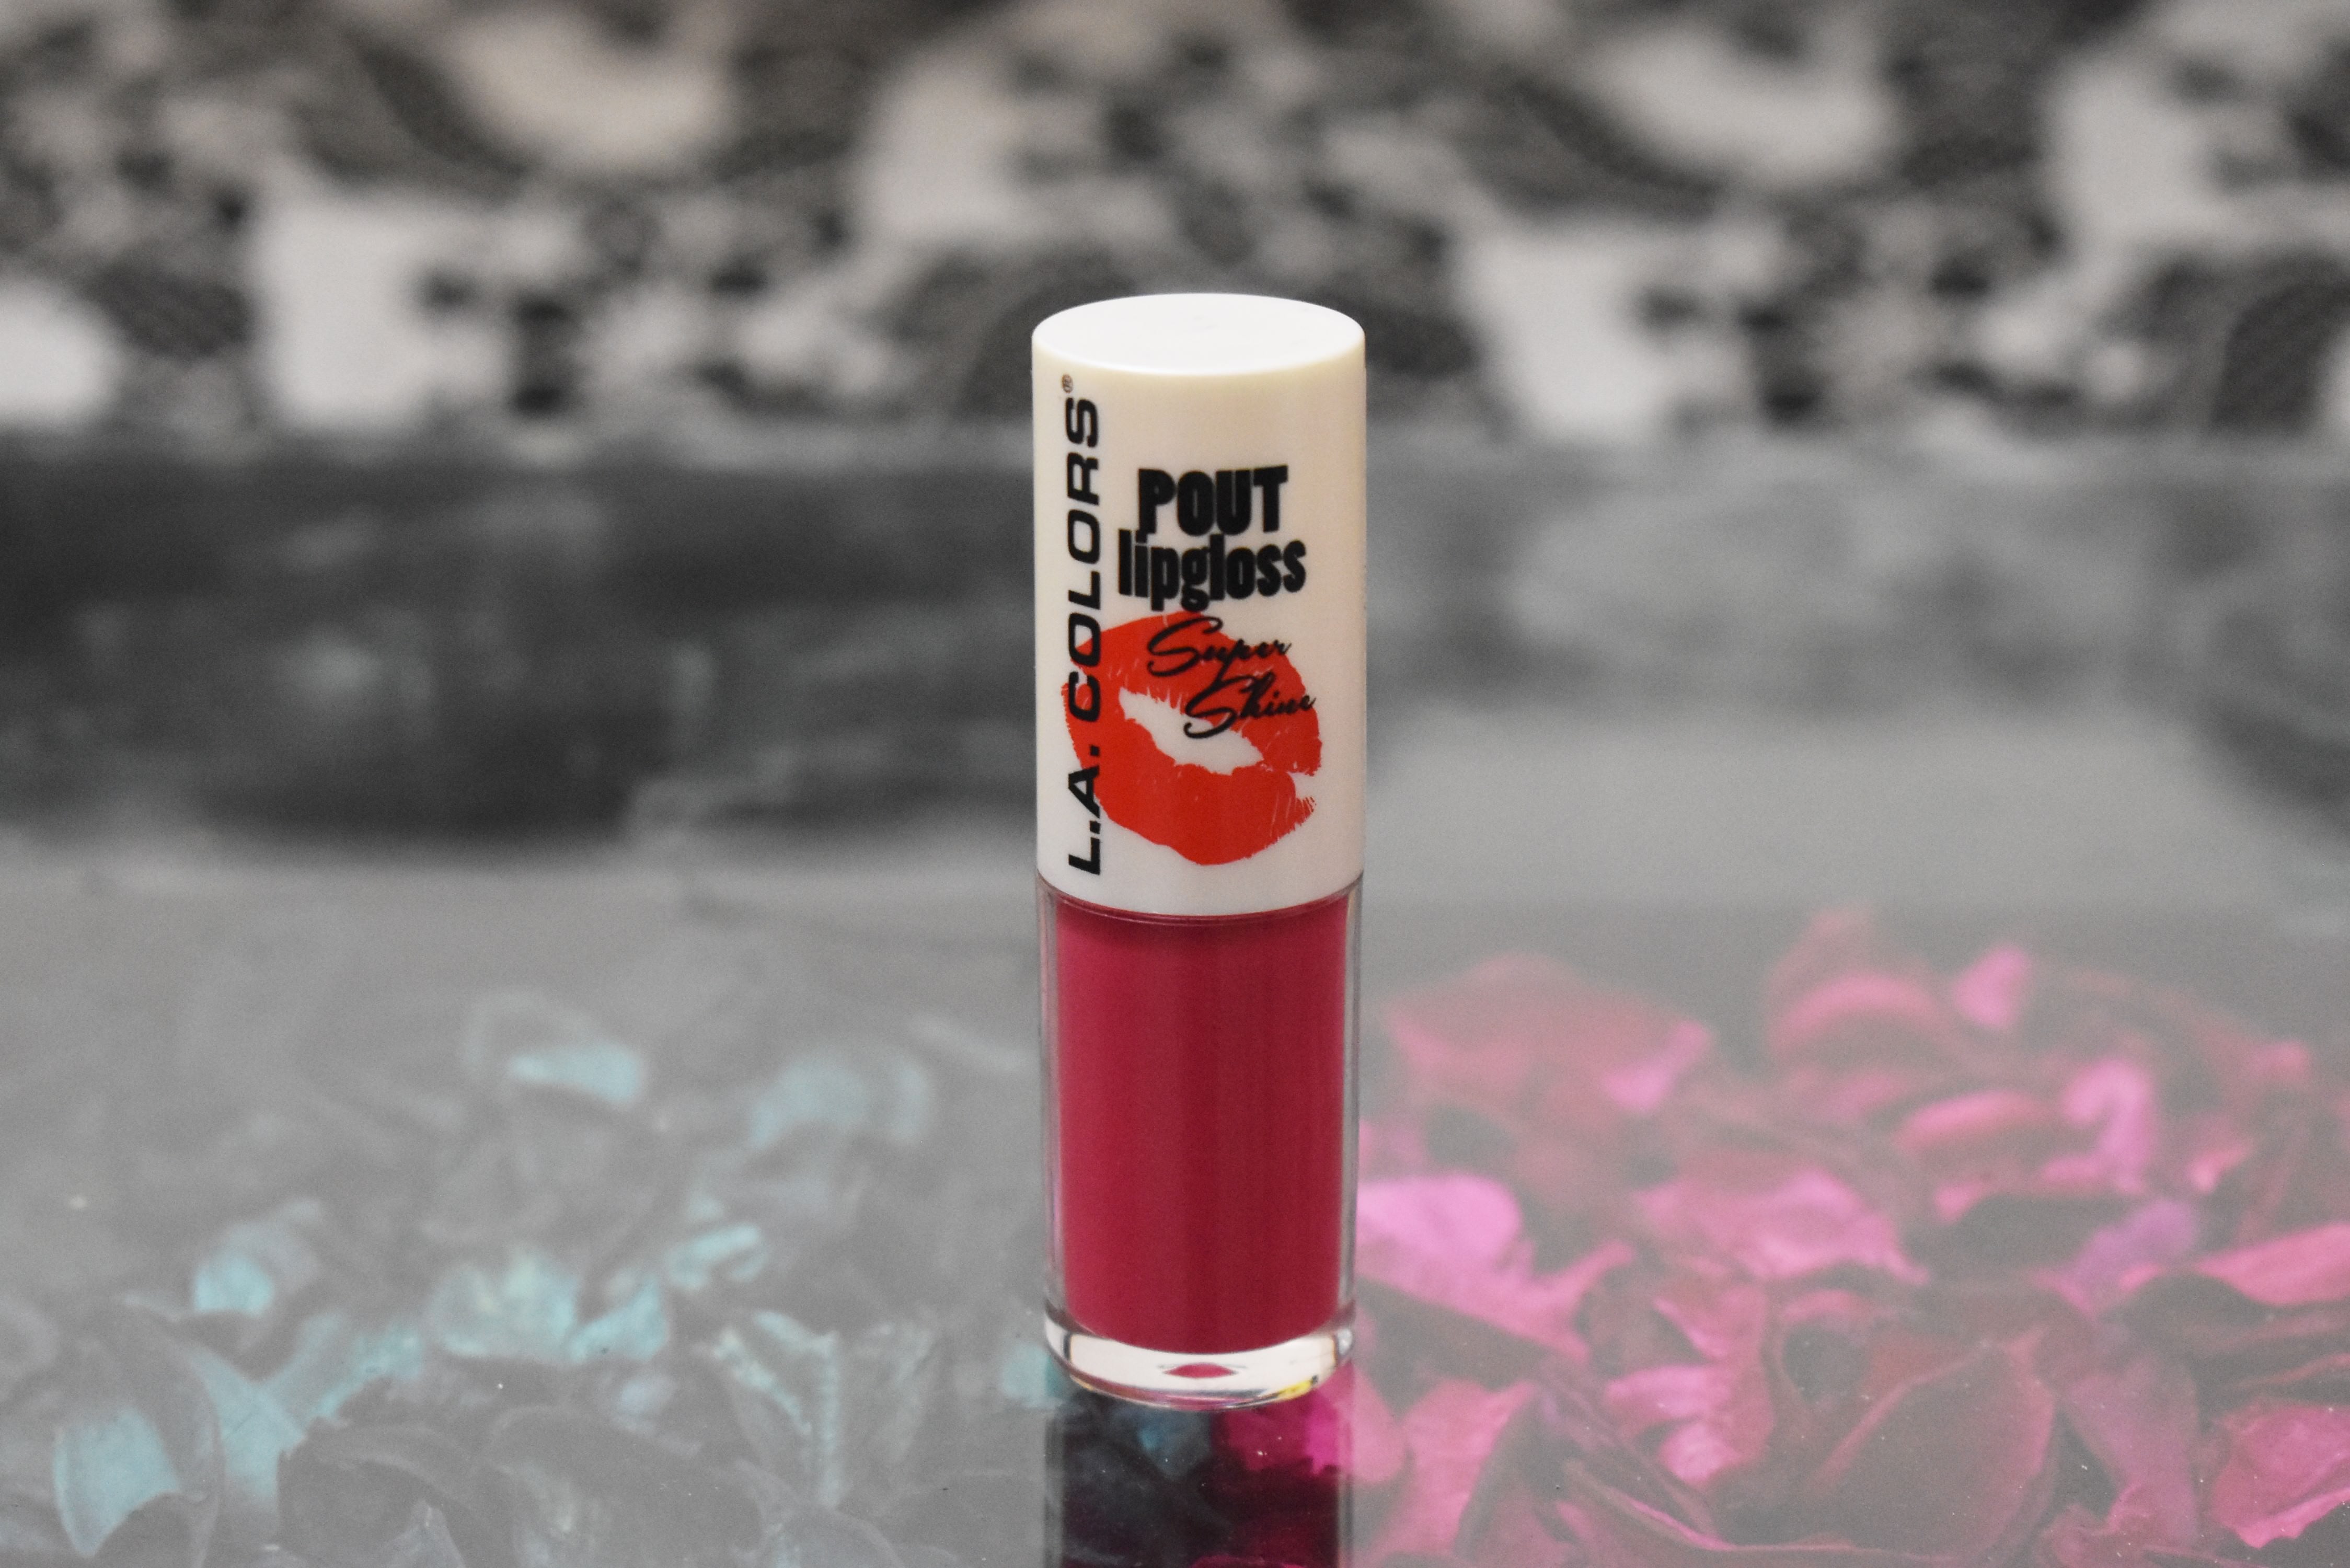 L.A. Colors Pout Super Shine Lip Gloss French Kiss Review